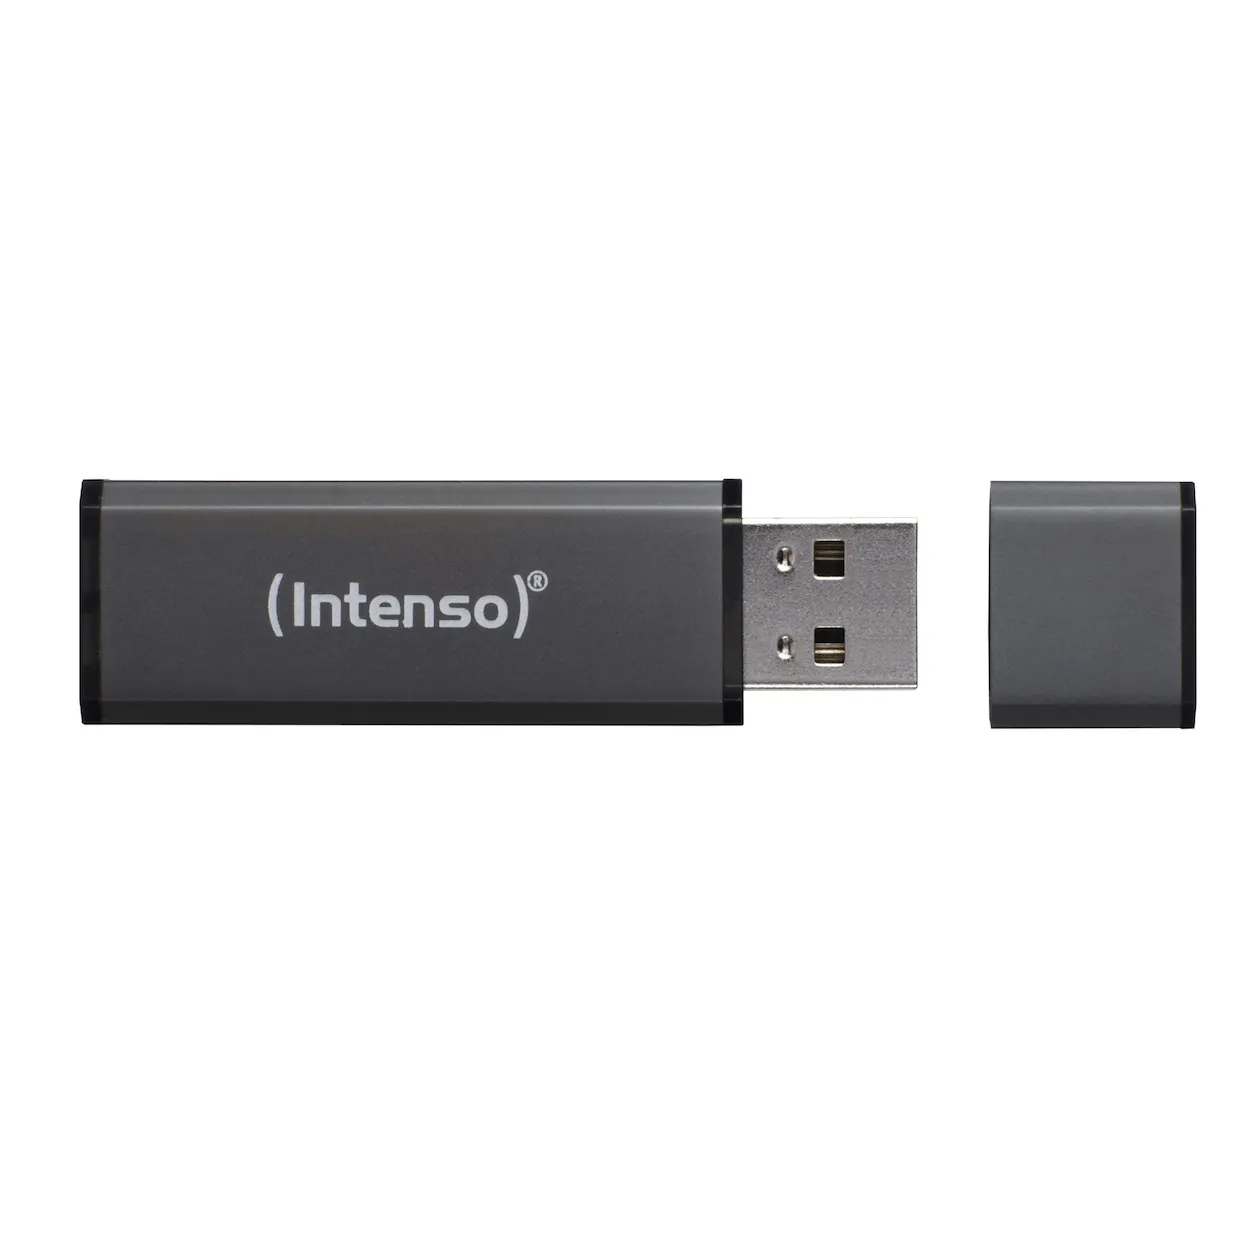 Intenso Alu Line 16GB (USB 2.0) Antraciet